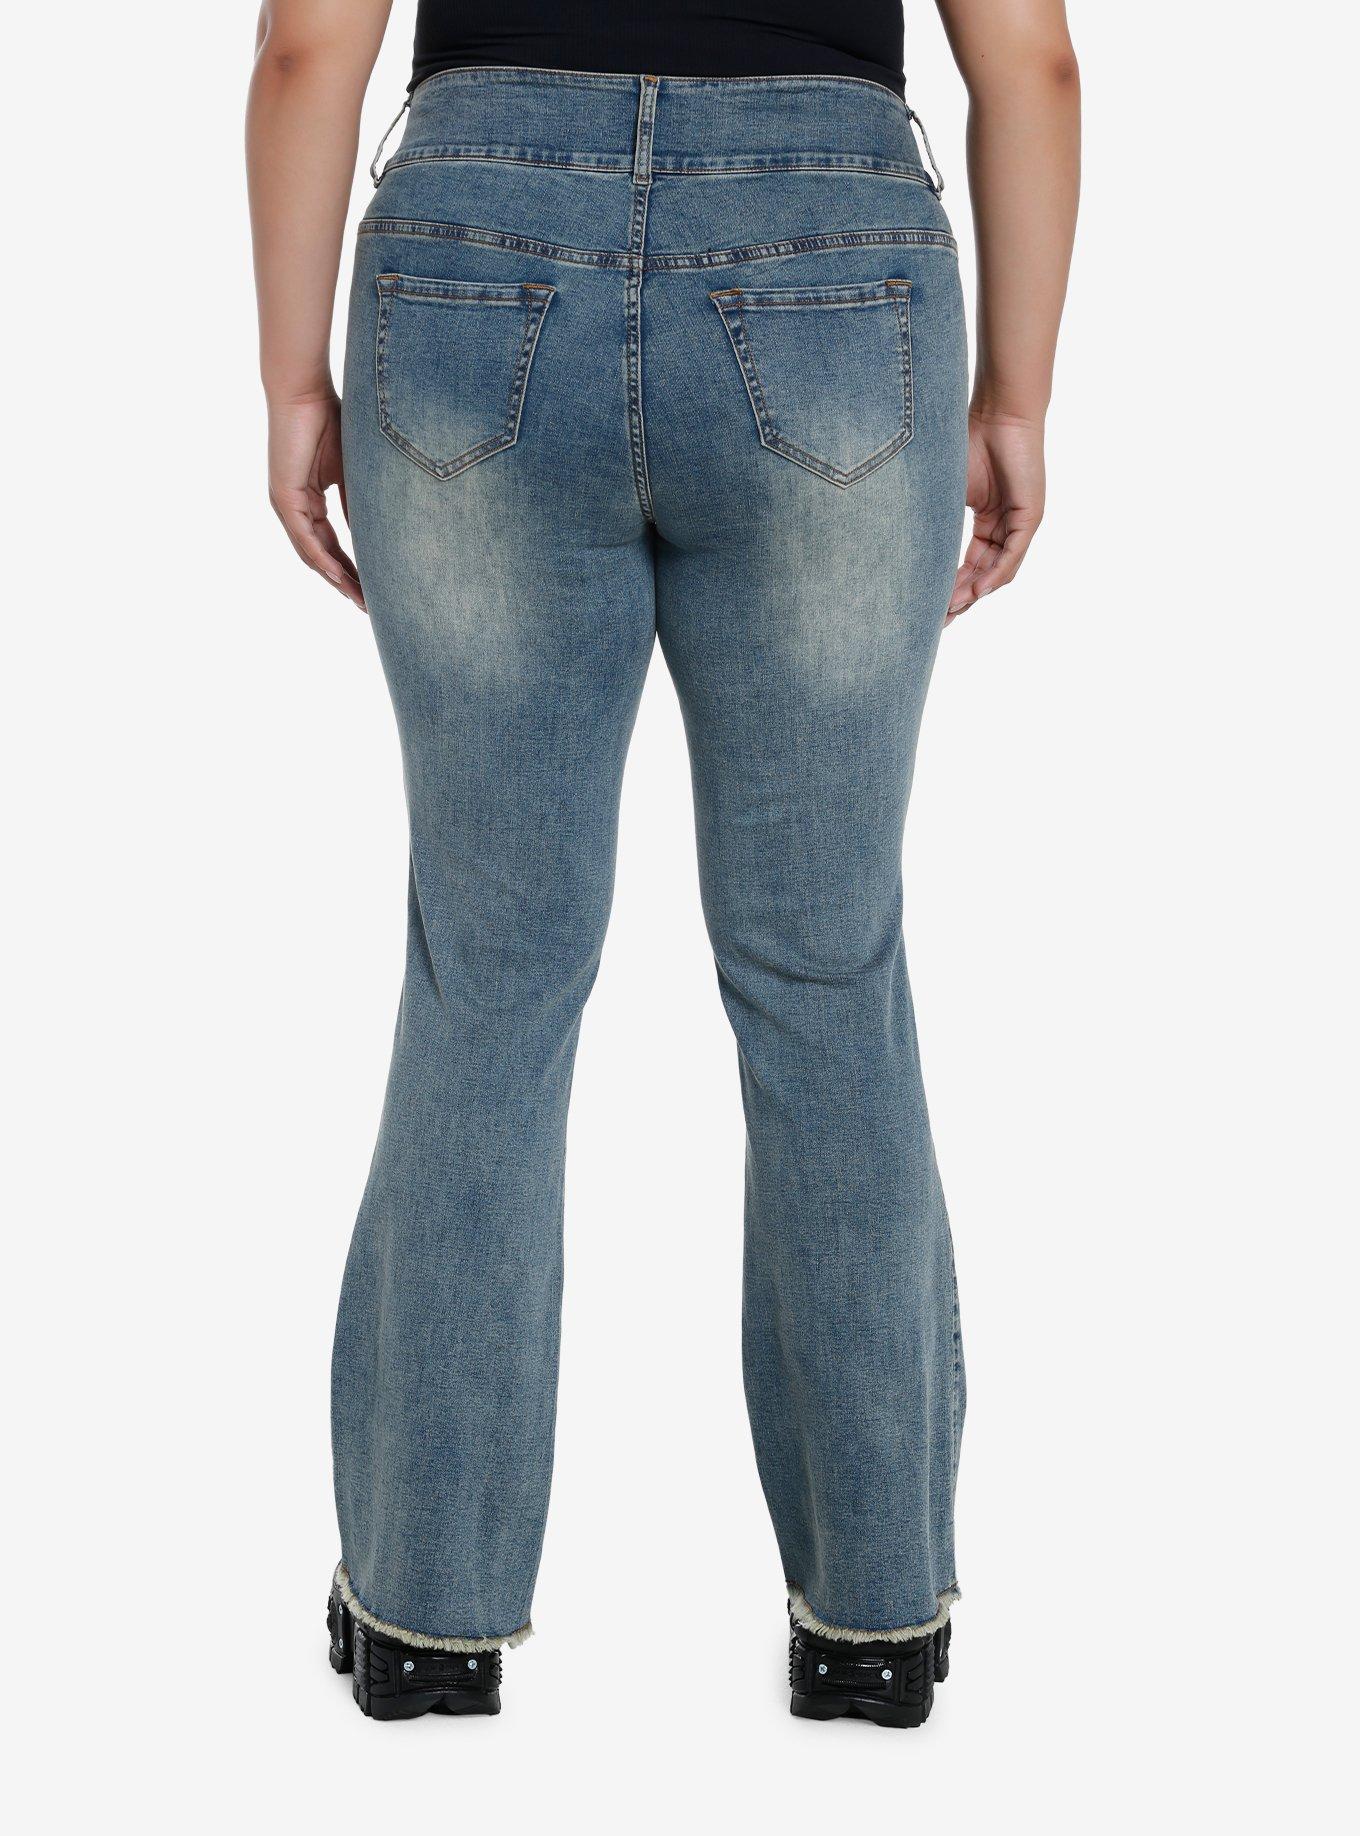 Disney Tinker Bell Low-Rise Jeans Plus Size, MEDIUM WASHED DENIM, alternate